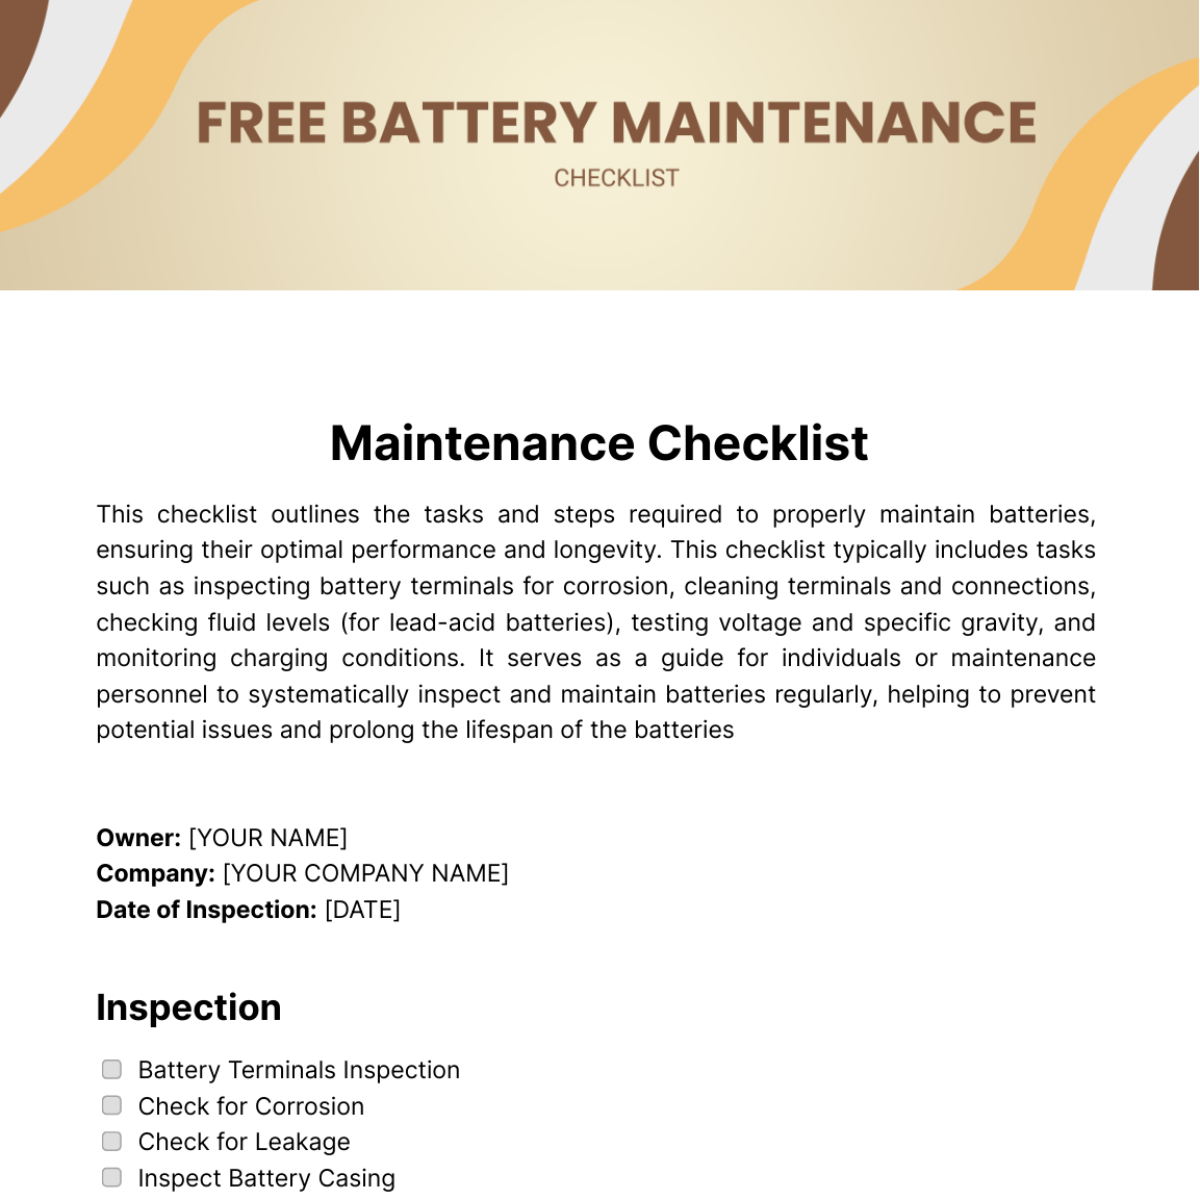 Free Battery Maintenance Checklist Template